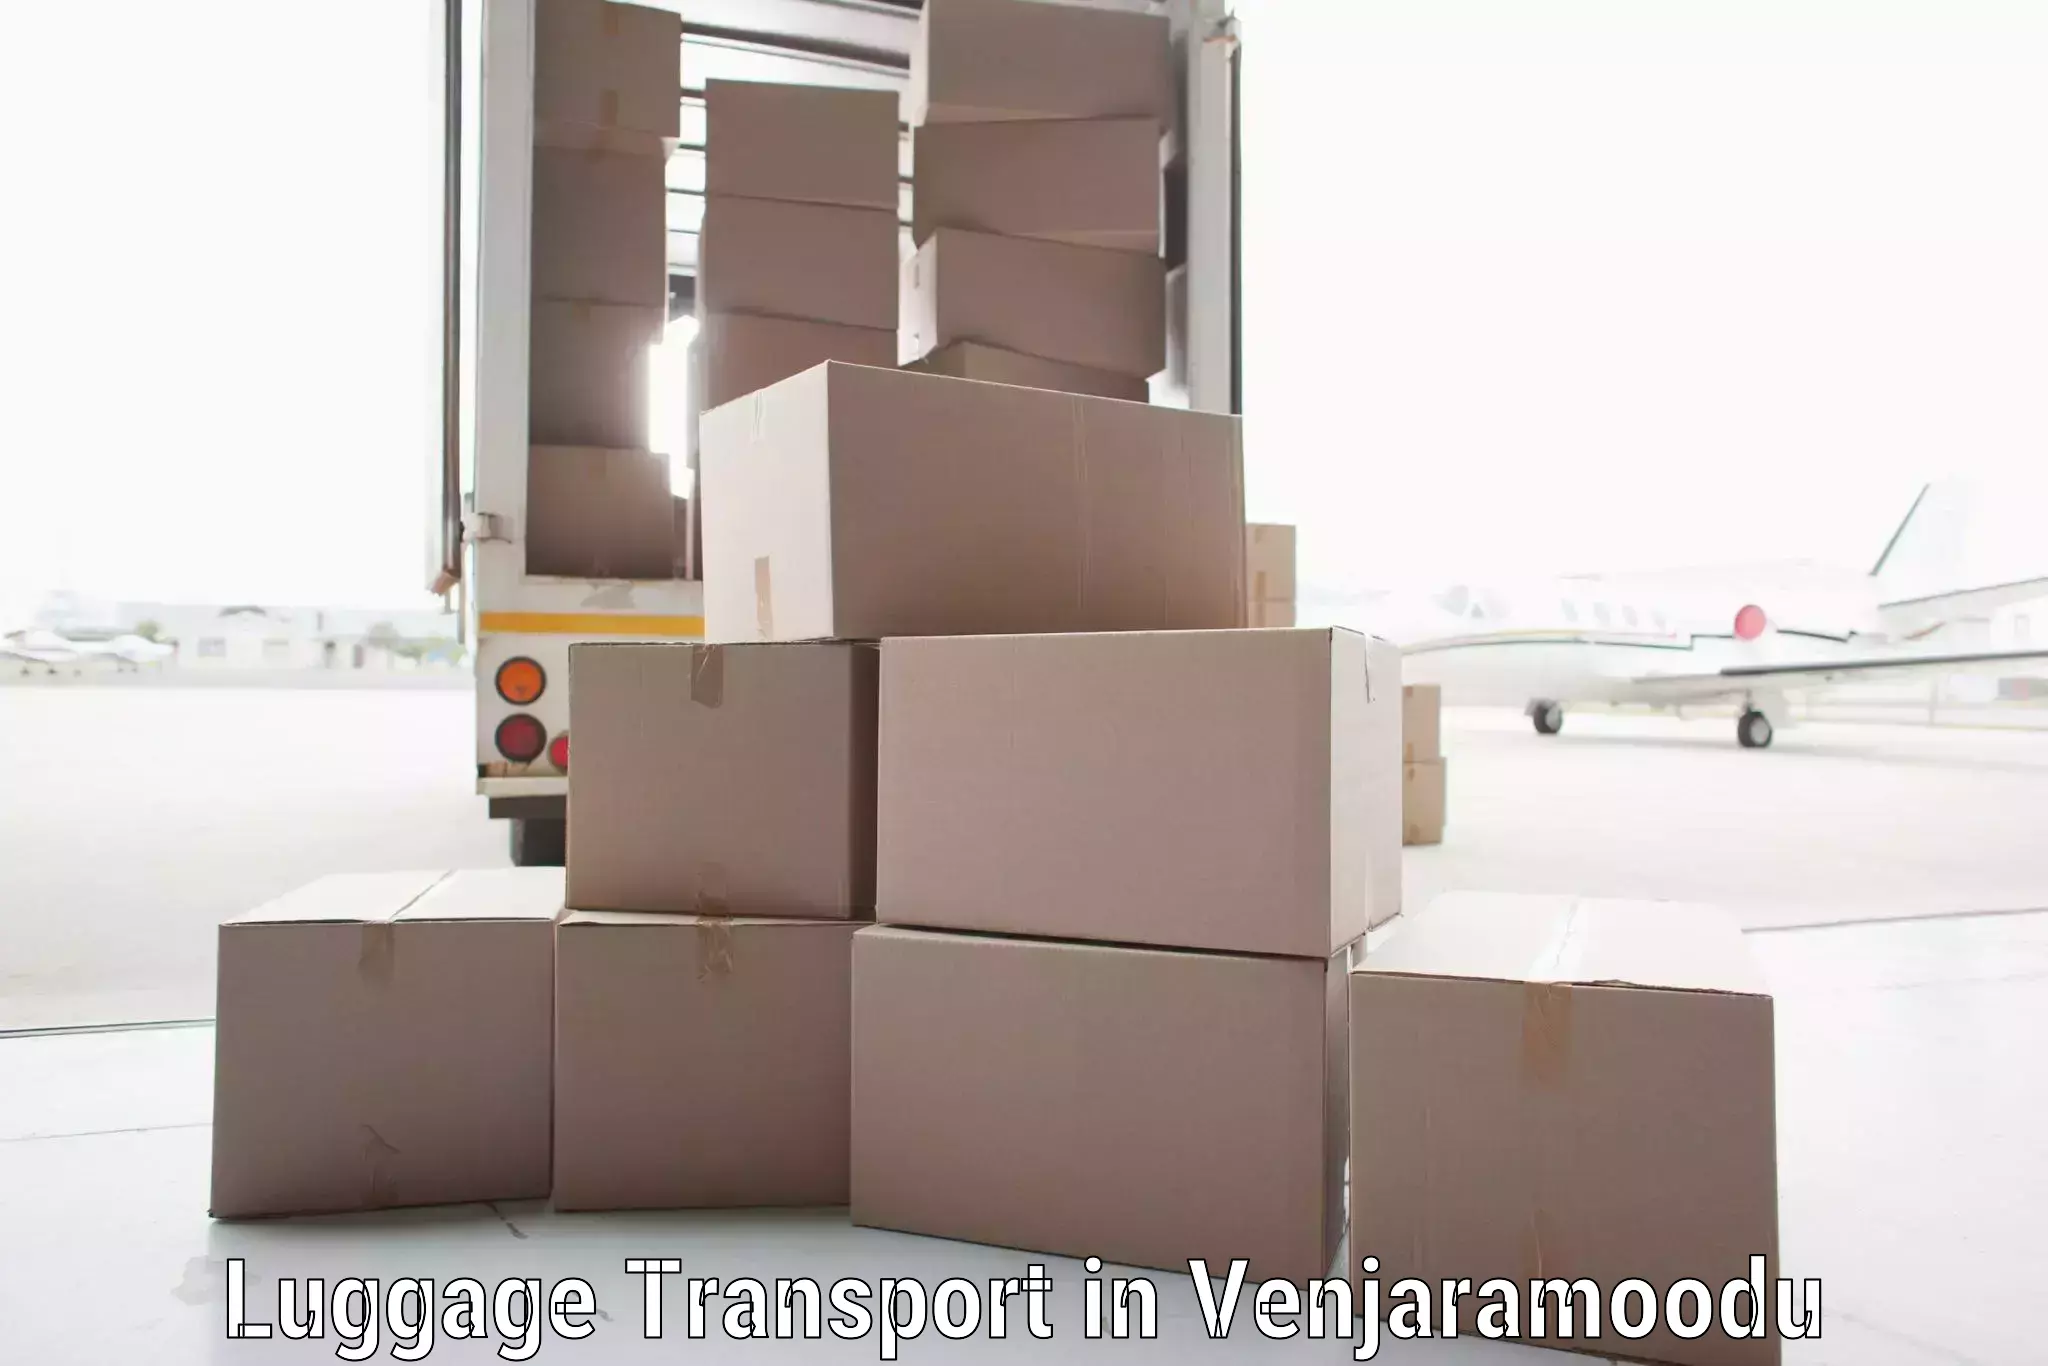 Luggage shipment tracking in Venjaramoodu